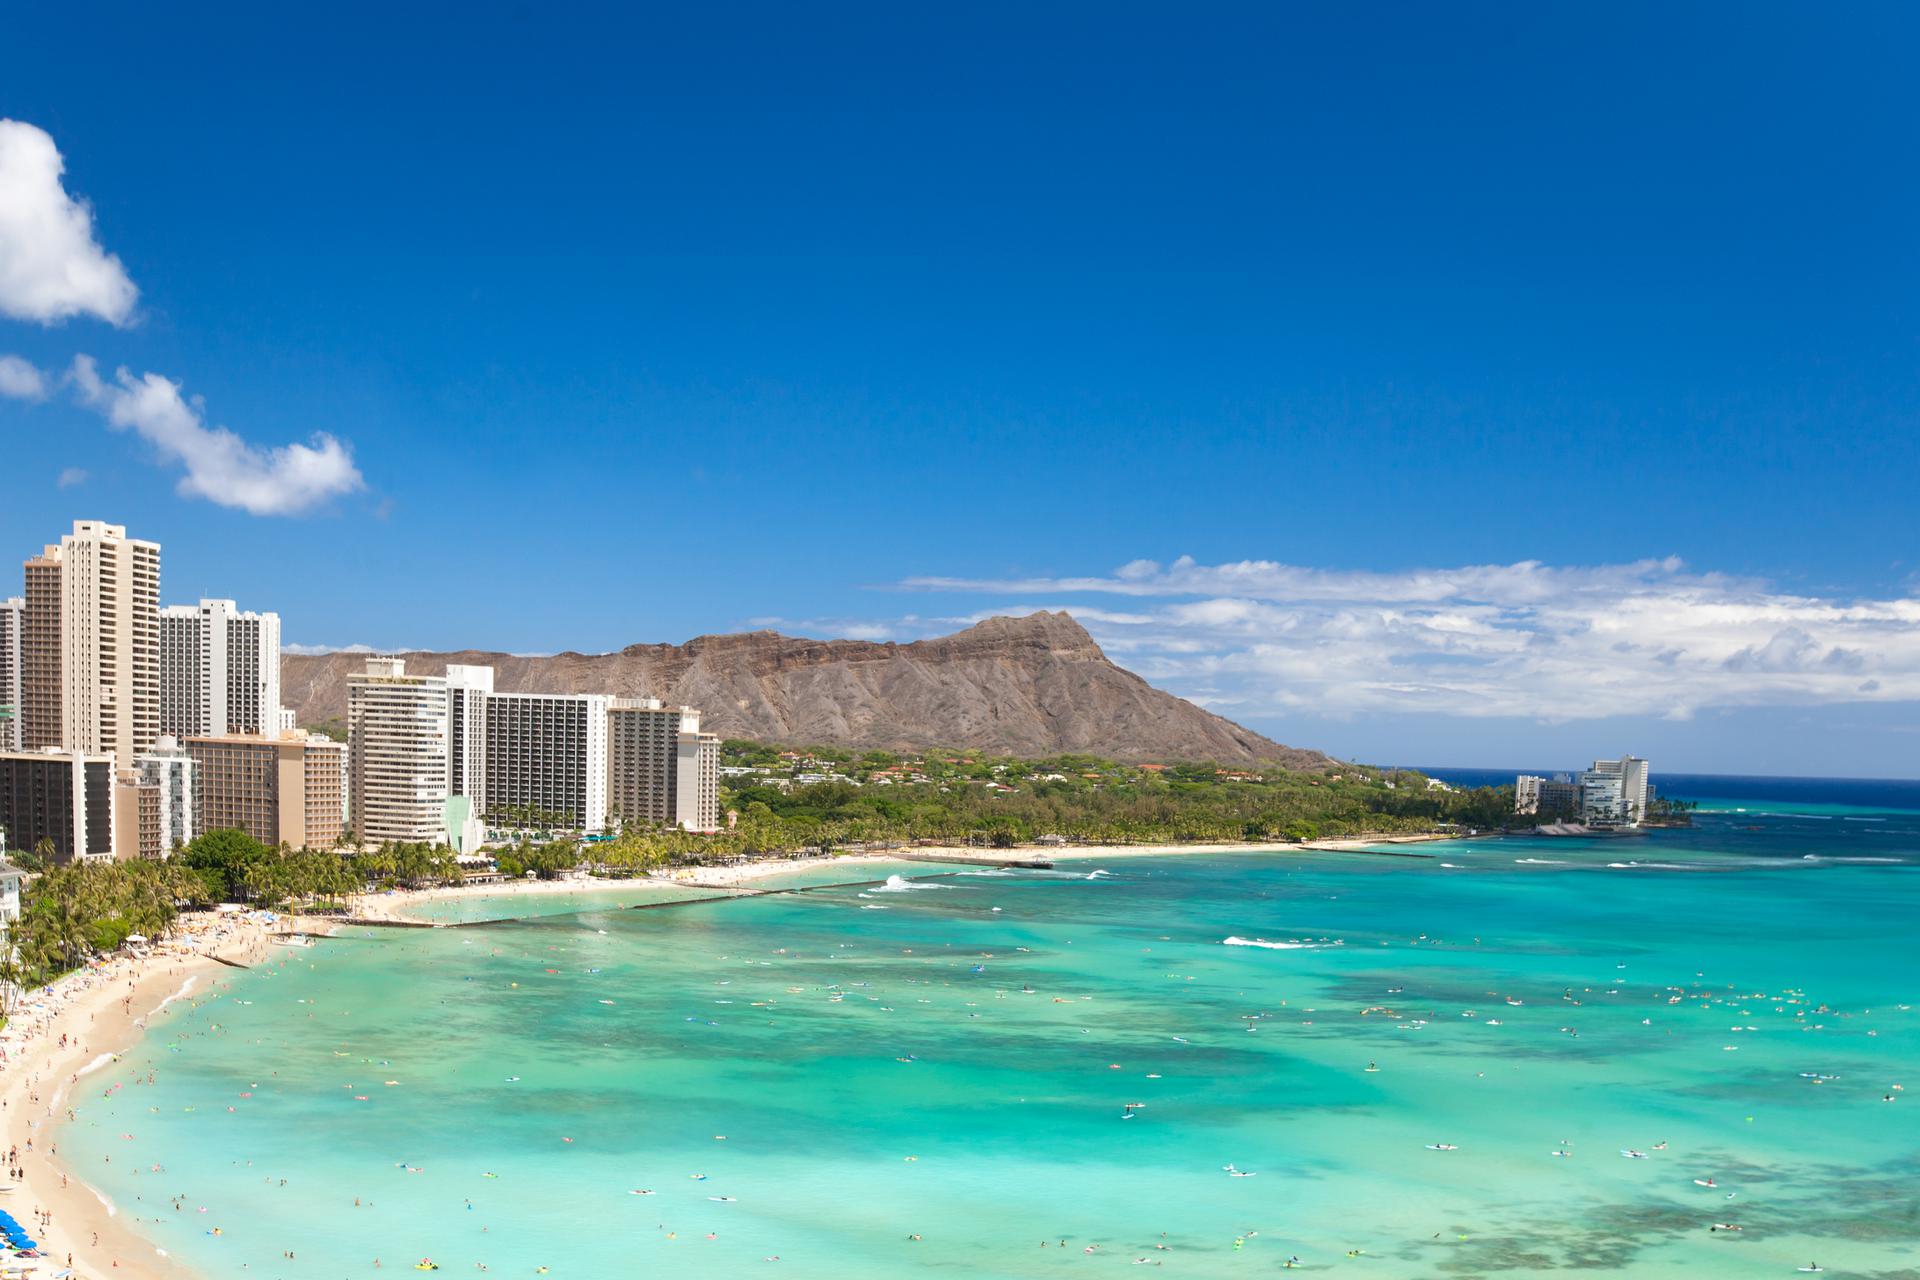 Waikiki beach and shoreline with Diamond Head in the background